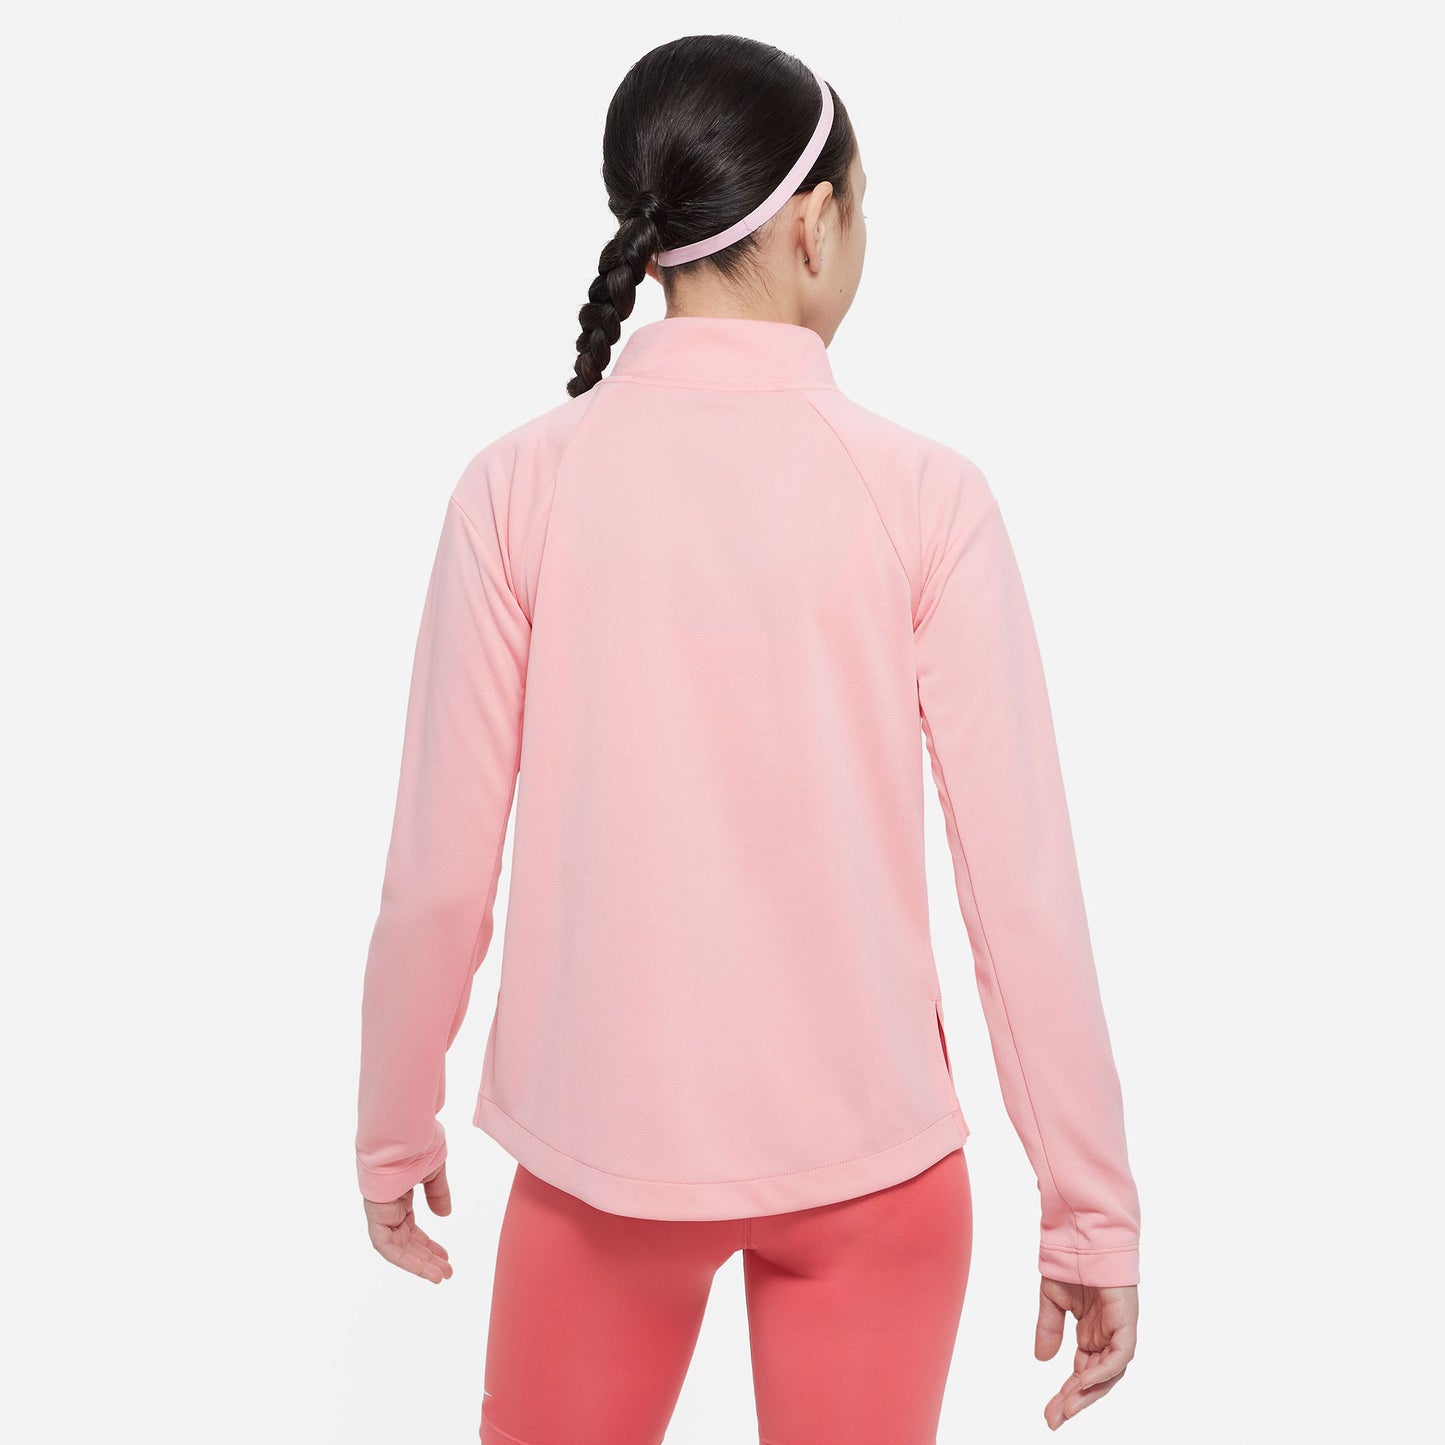 Nike Dri-FIT Girls' Long-Sleeve Top Pink (2)